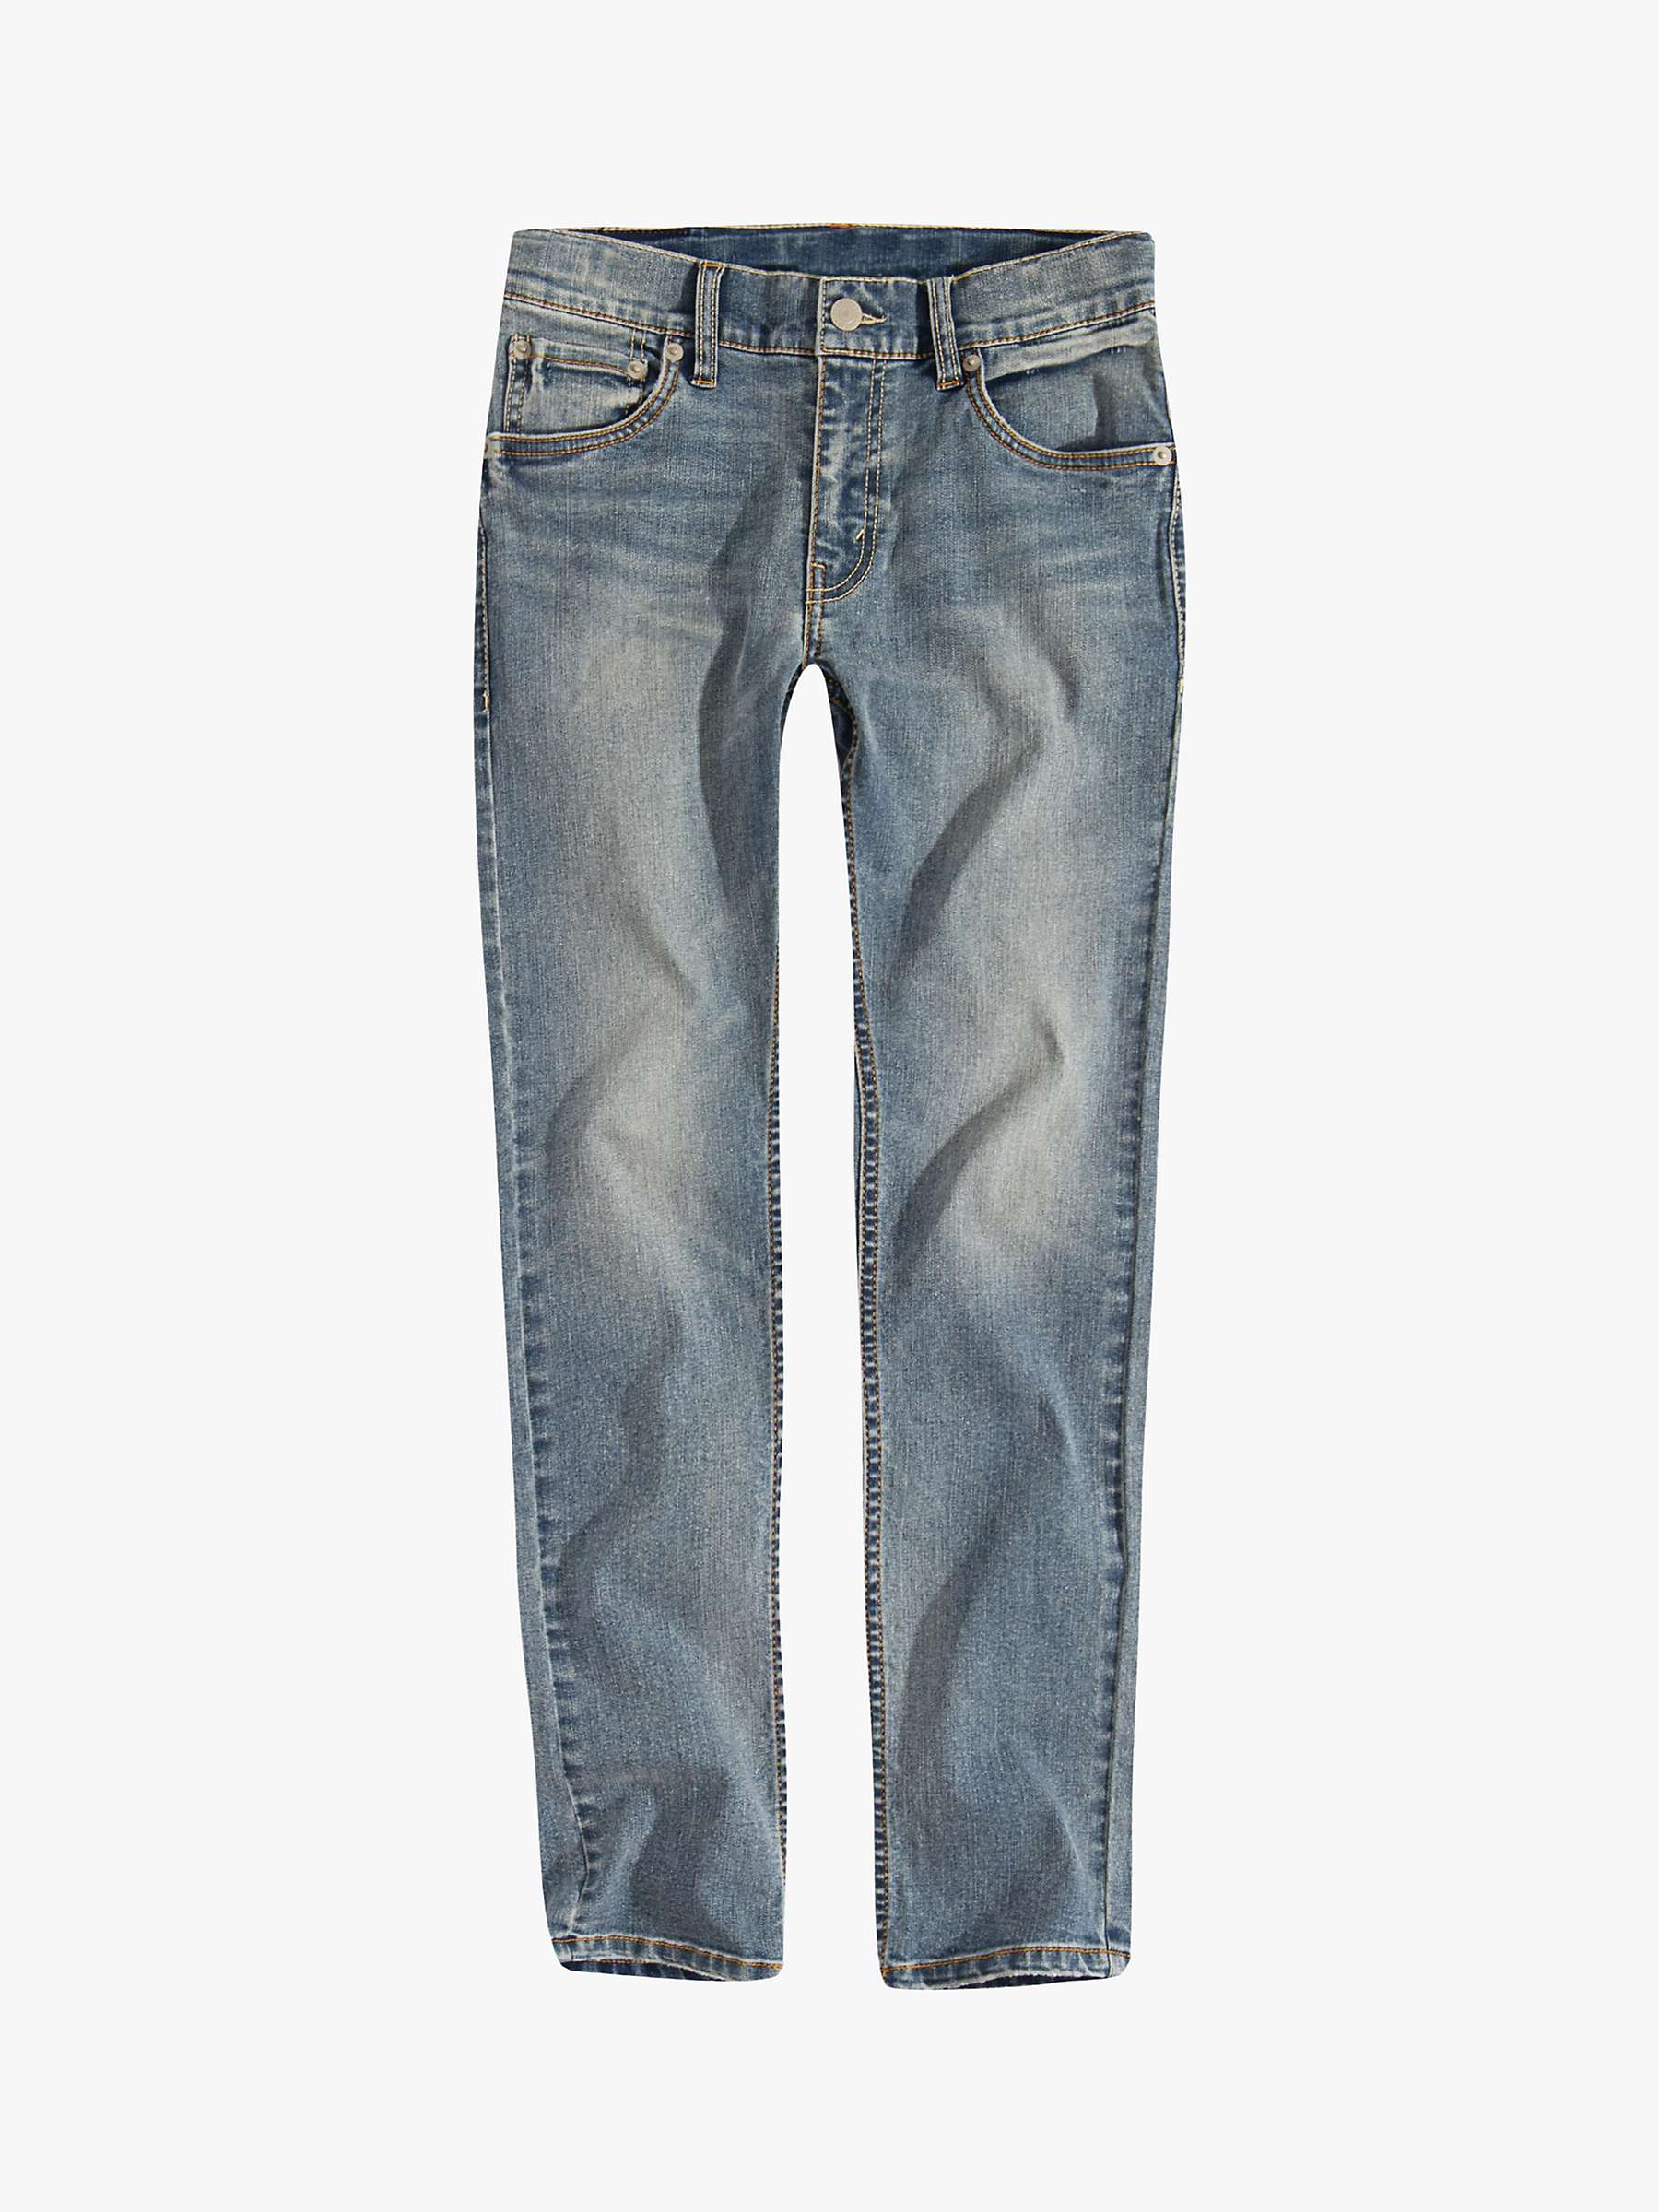 Buy Levi's Kids' 510 Skinny Burbank Jeans, Blue Online at johnlewis.com